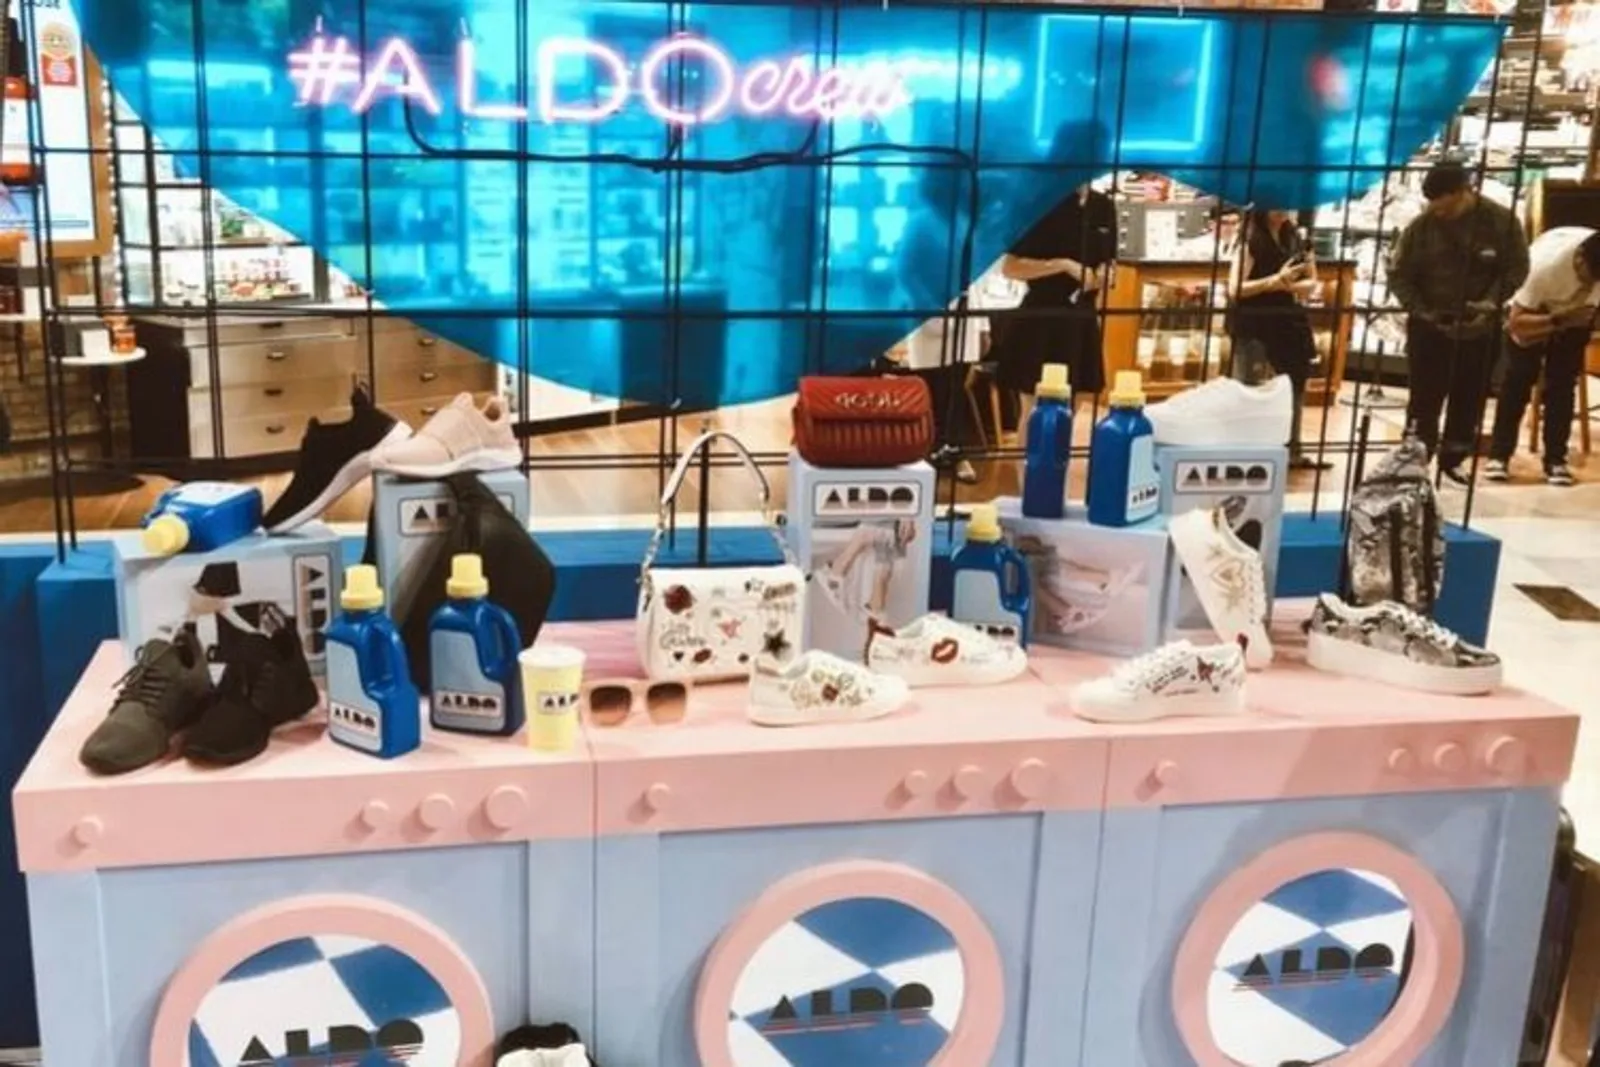 Koleksi Aldo Indonesia a la Retro Pop hingga Pop Up Store yang Catchy!